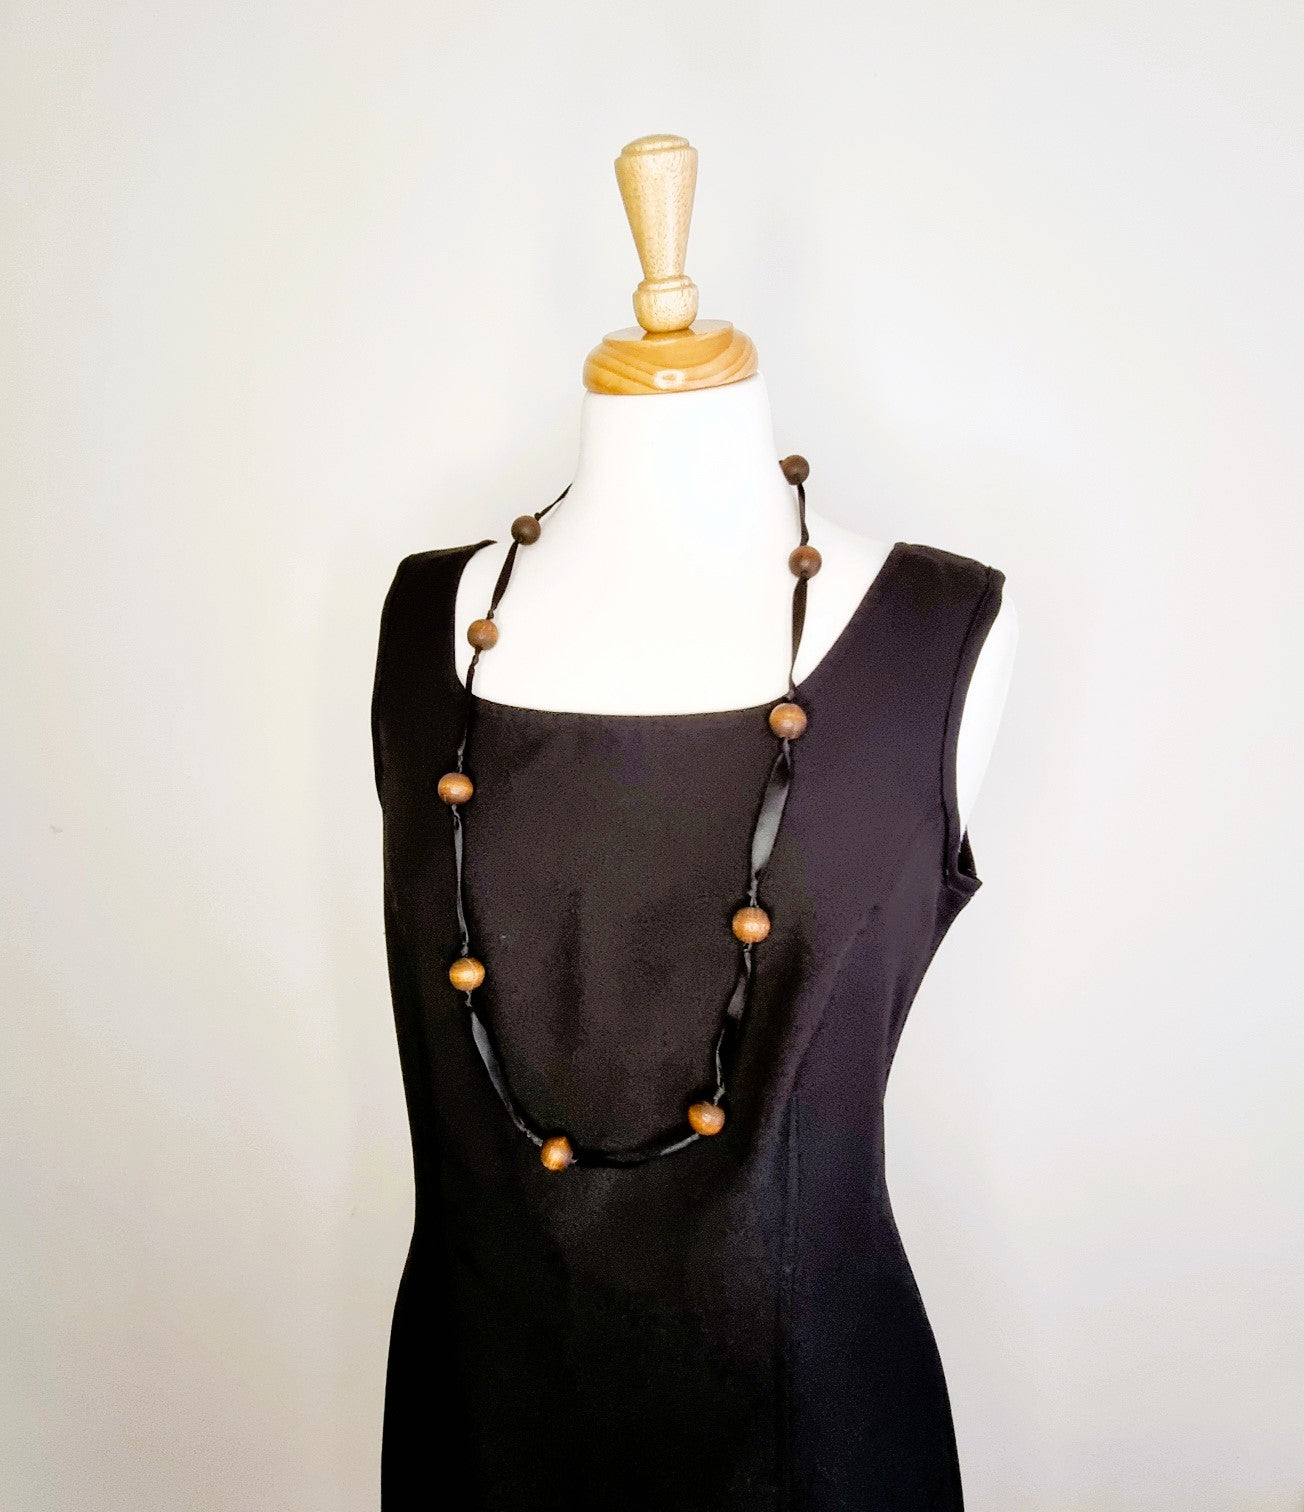 Kelso - Black tunic sleeveless dress